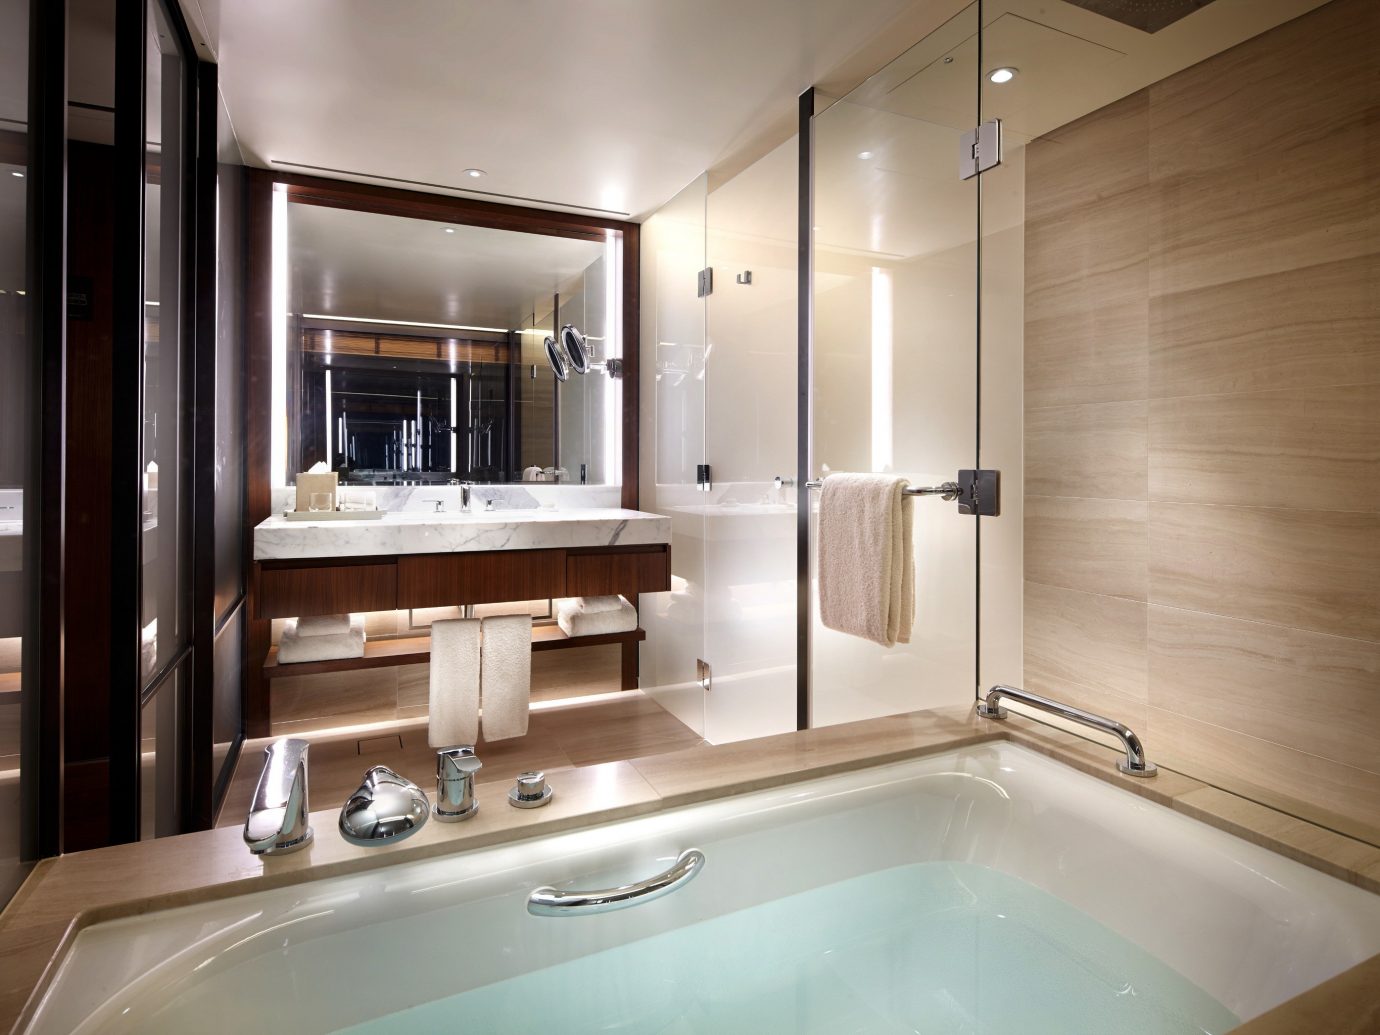 Hotels Luxury Travel indoor bathroom wall sink mirror vessel room interior design toilet counter plumbing fixture interior designer tub bathtub Bath